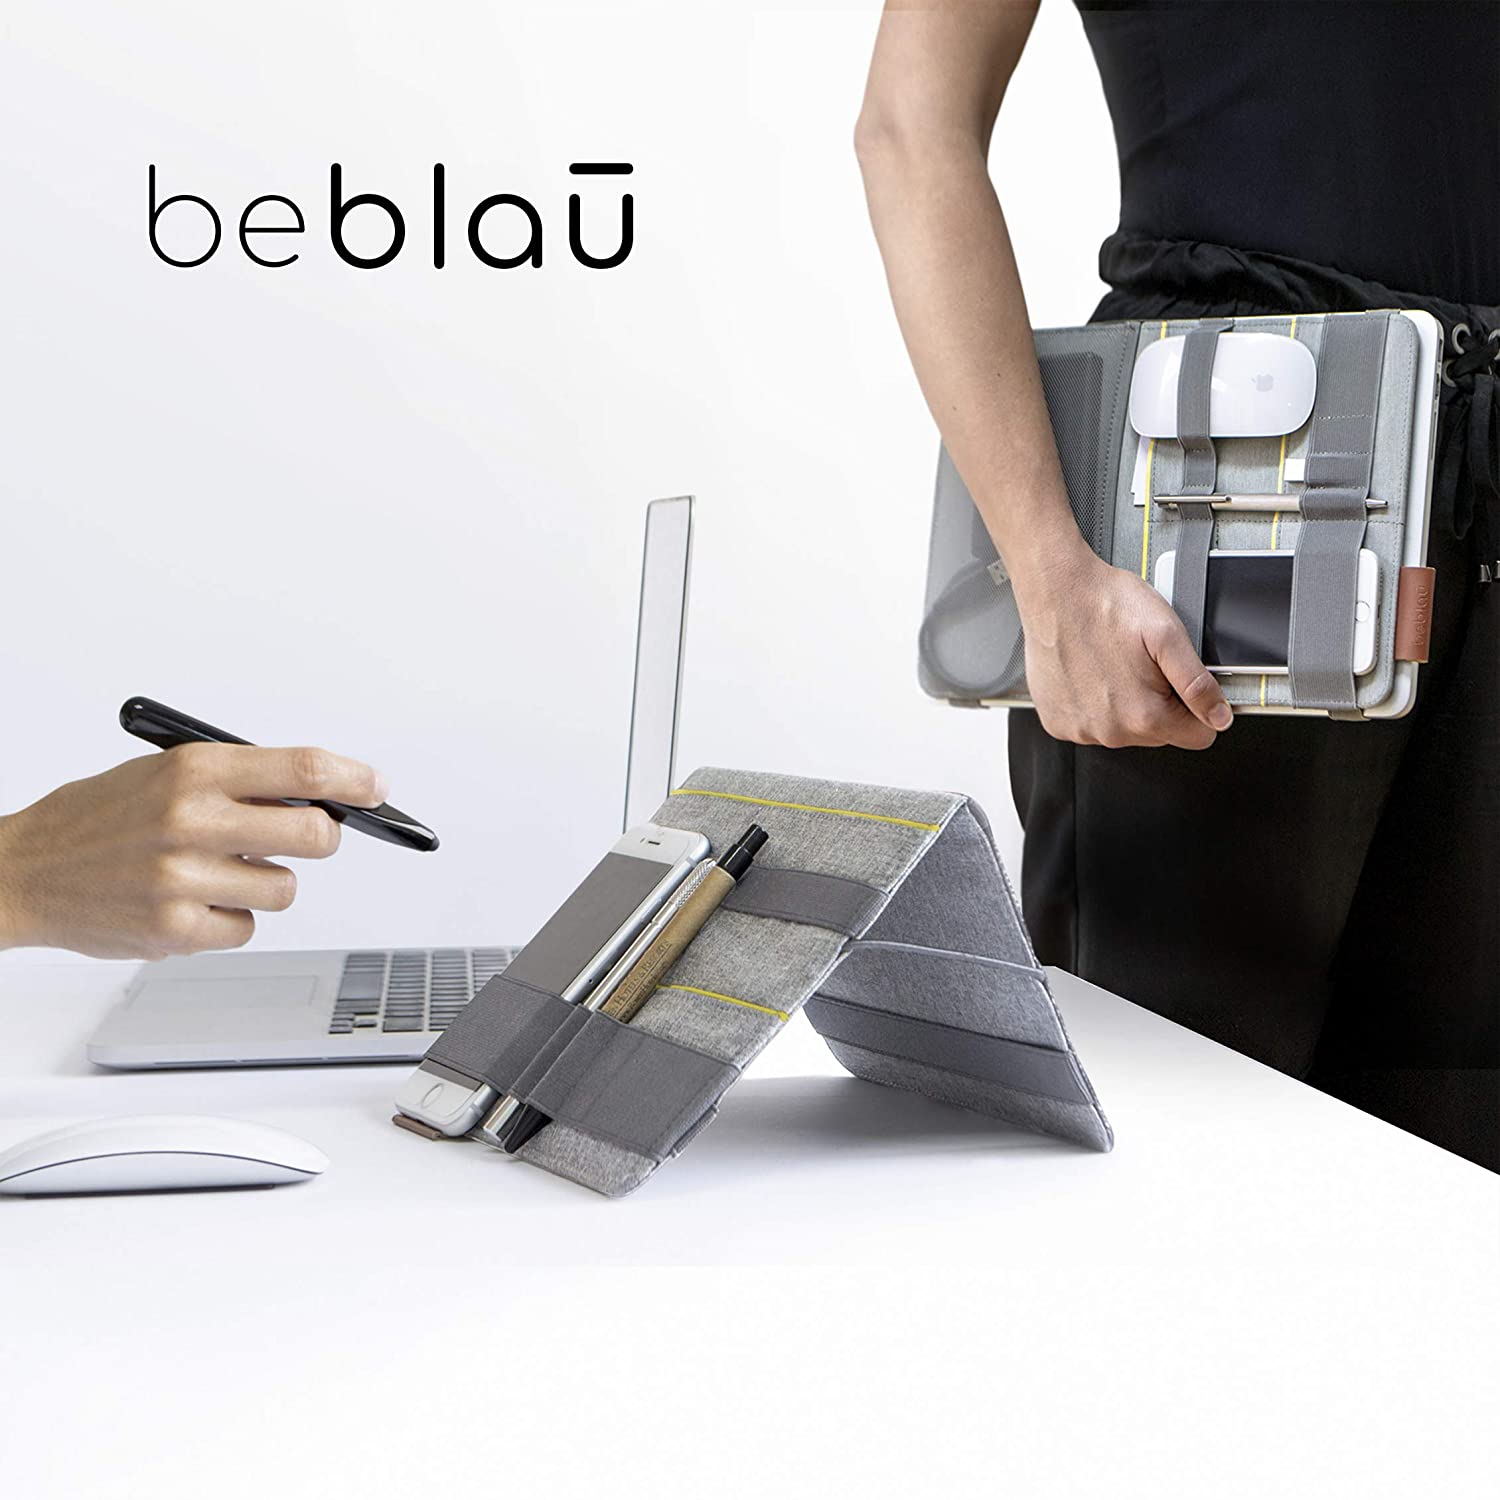 BEBLAU FOLD, Portable Organizer Attachable to Your Devices